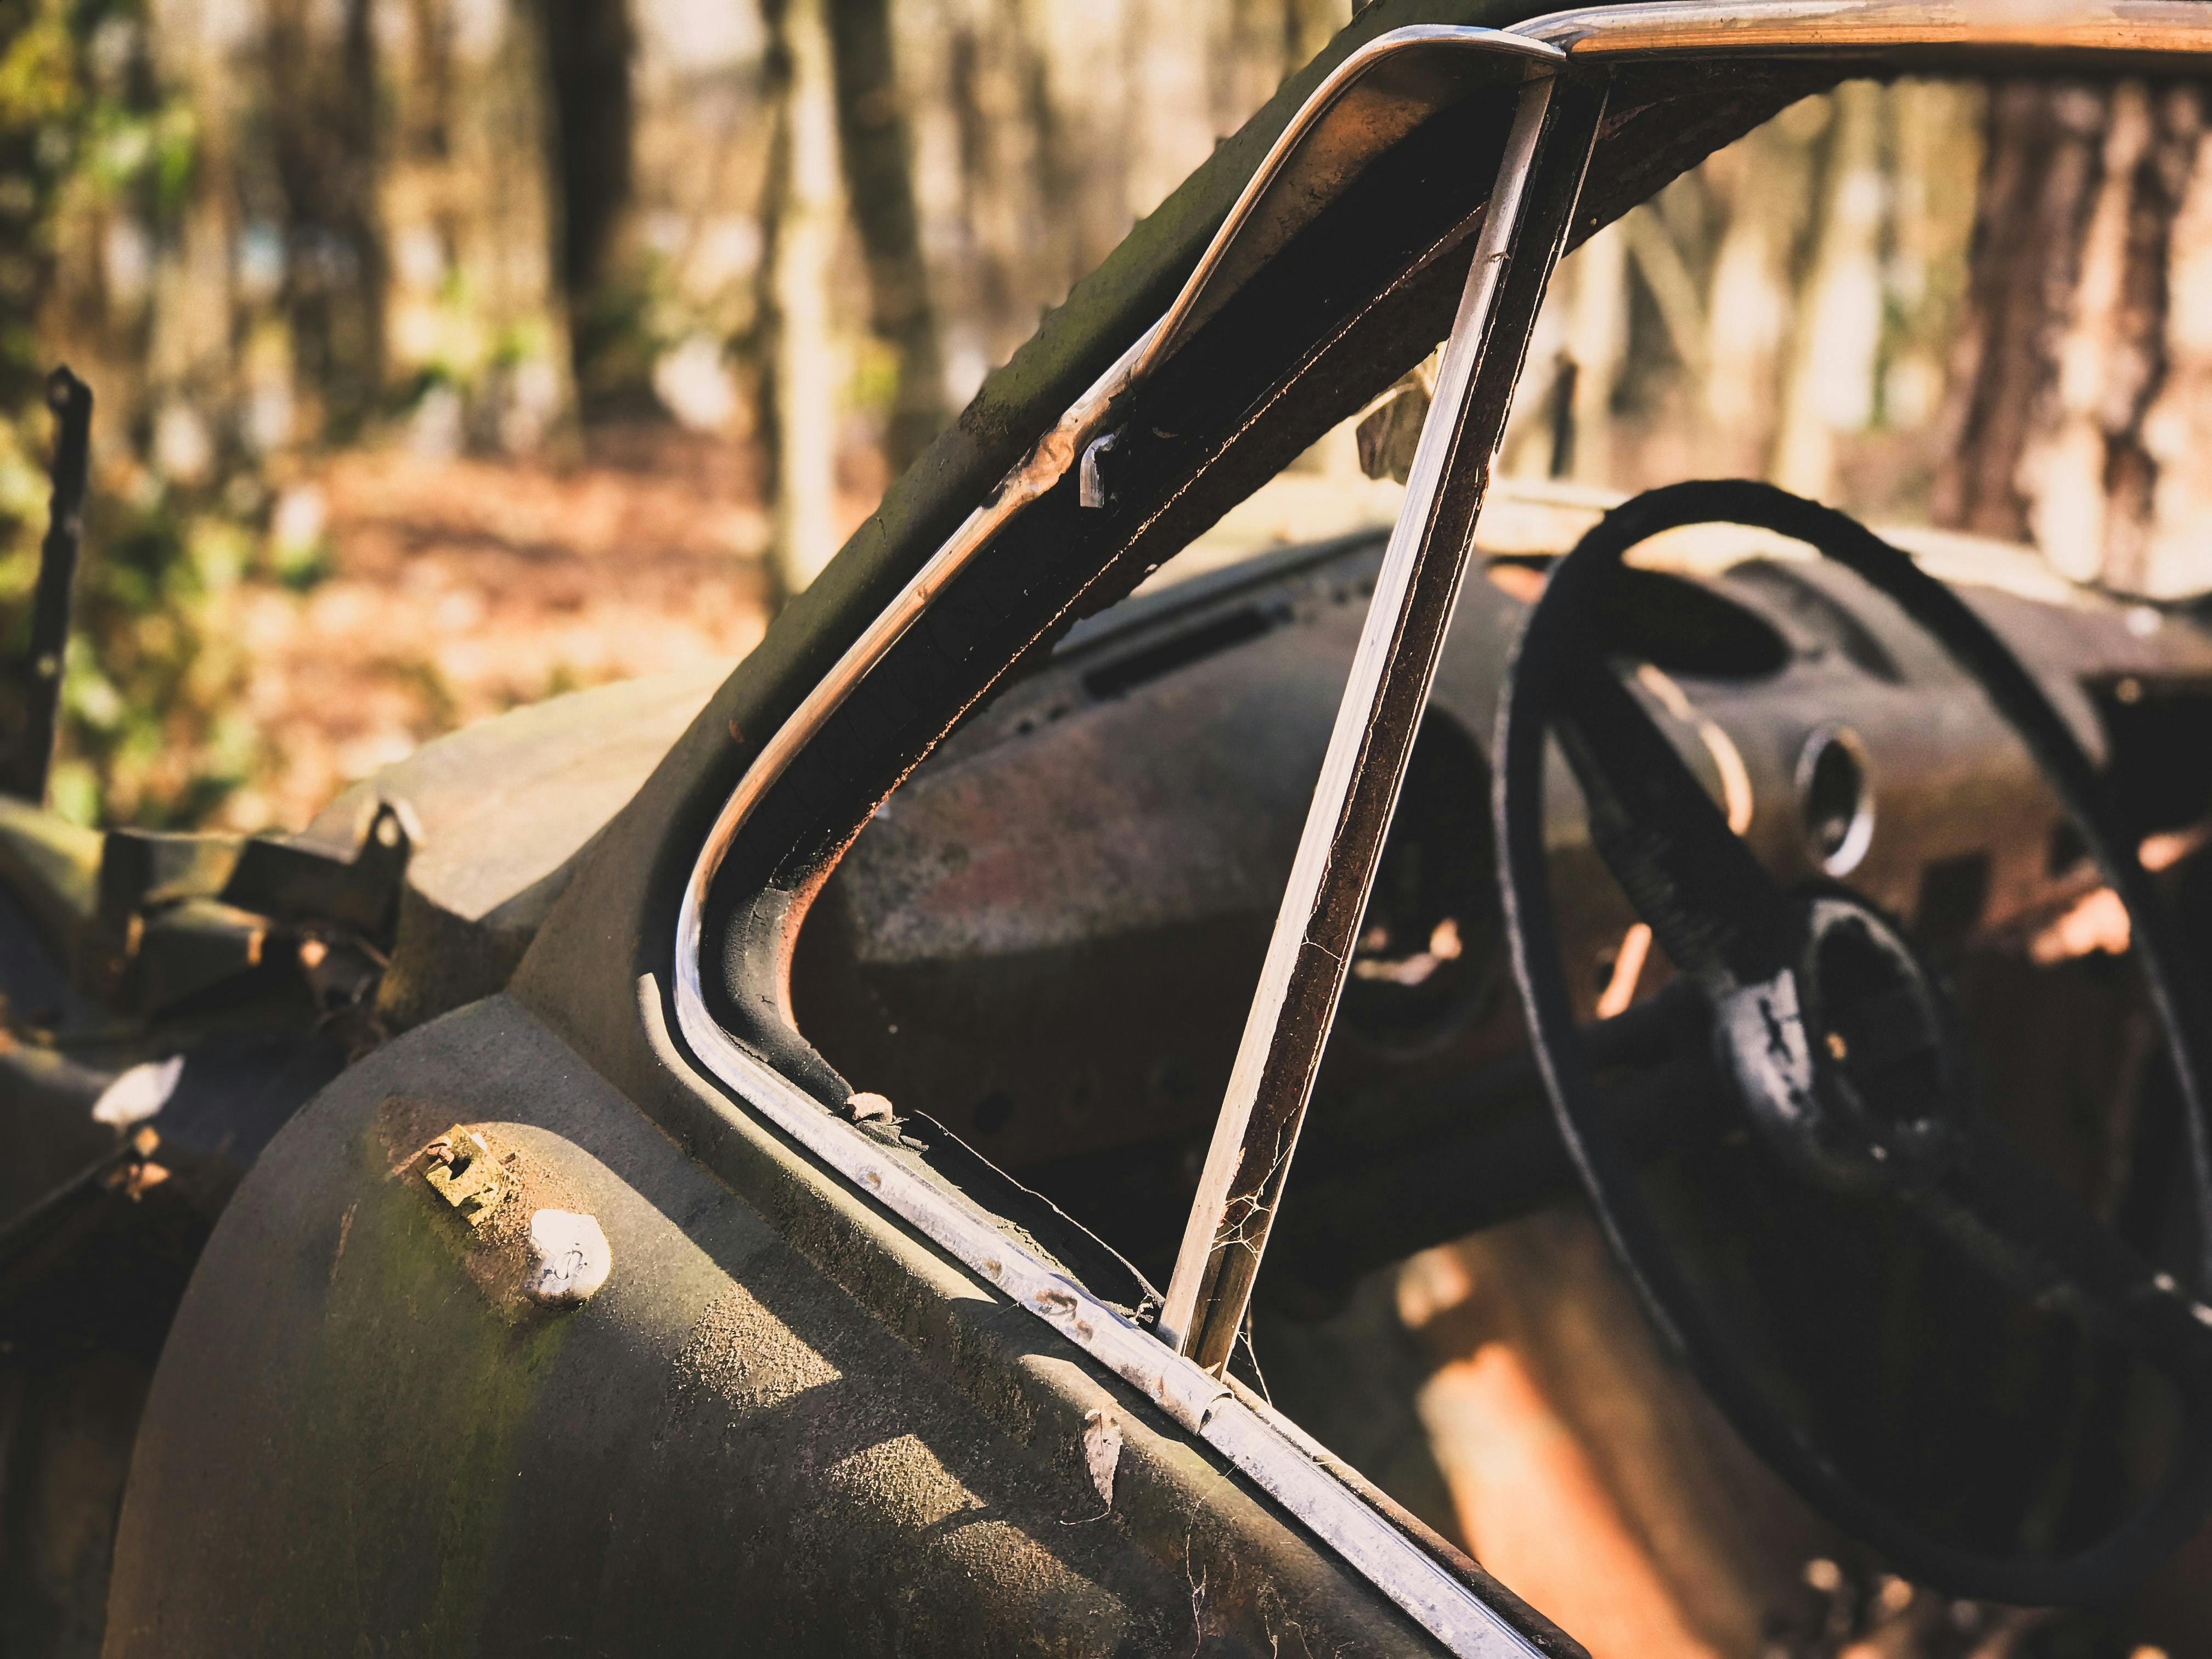 A rusty abandoned car sits among trees